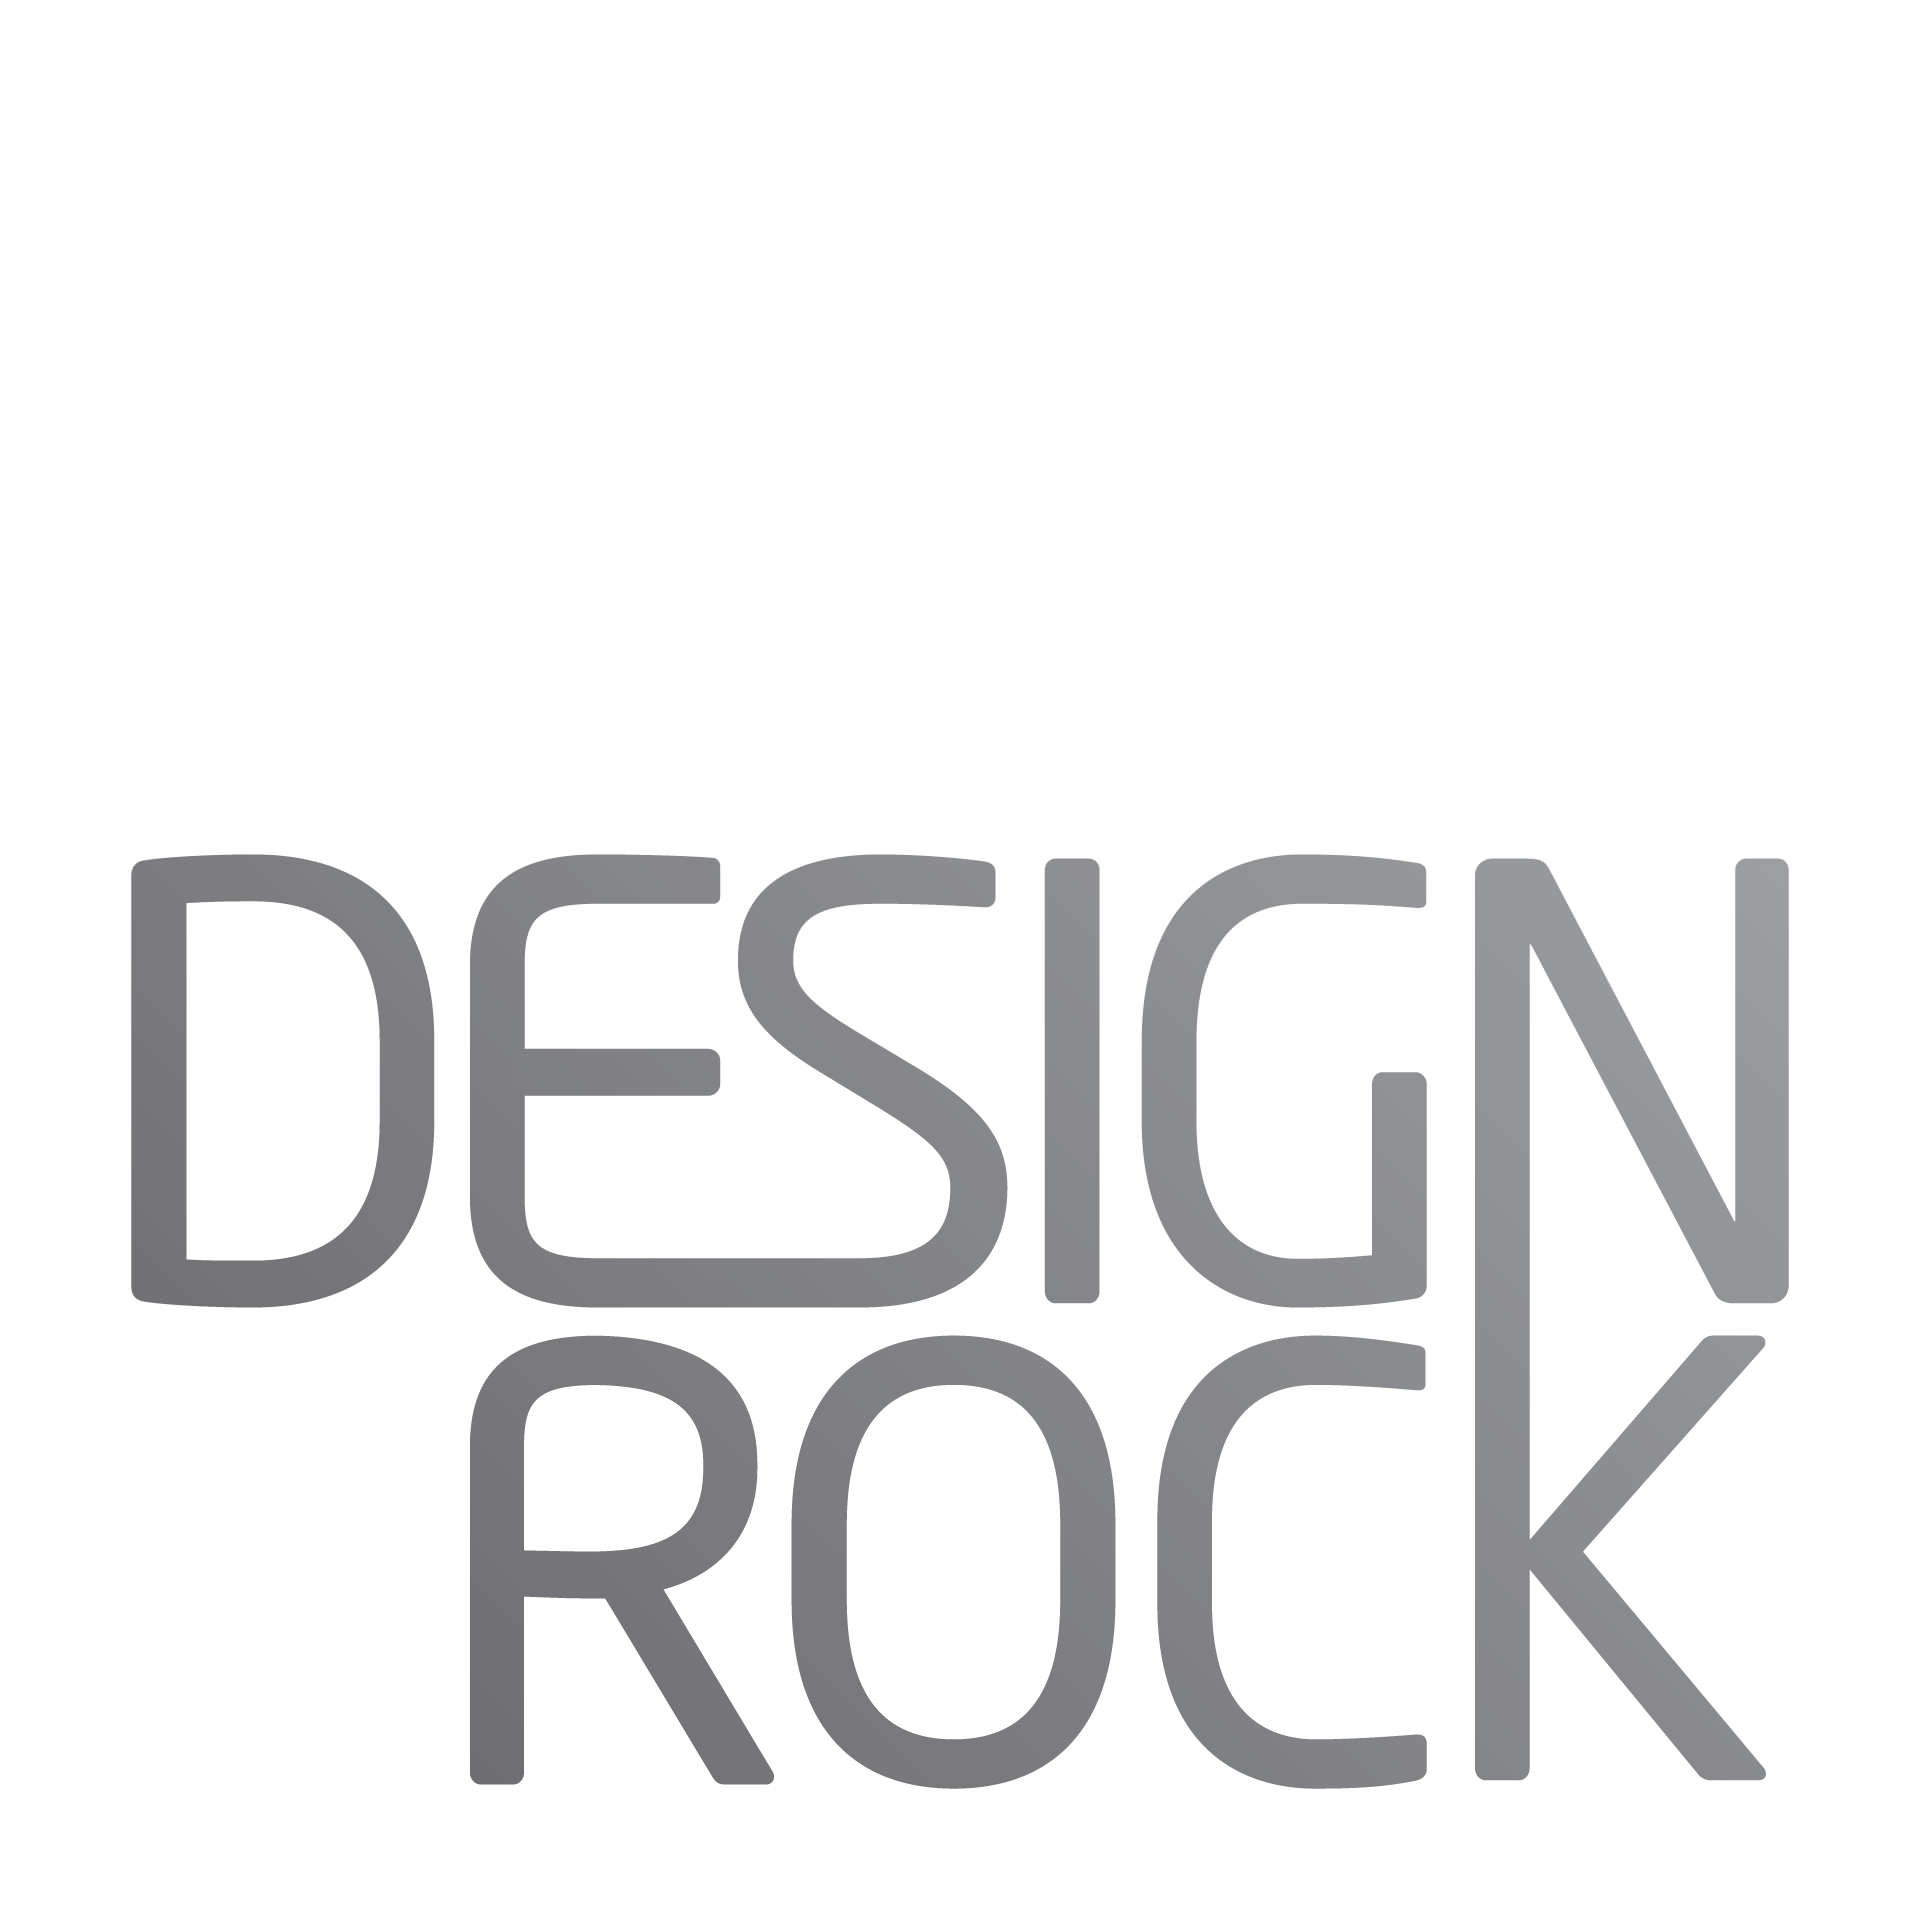 Designrock Ltd